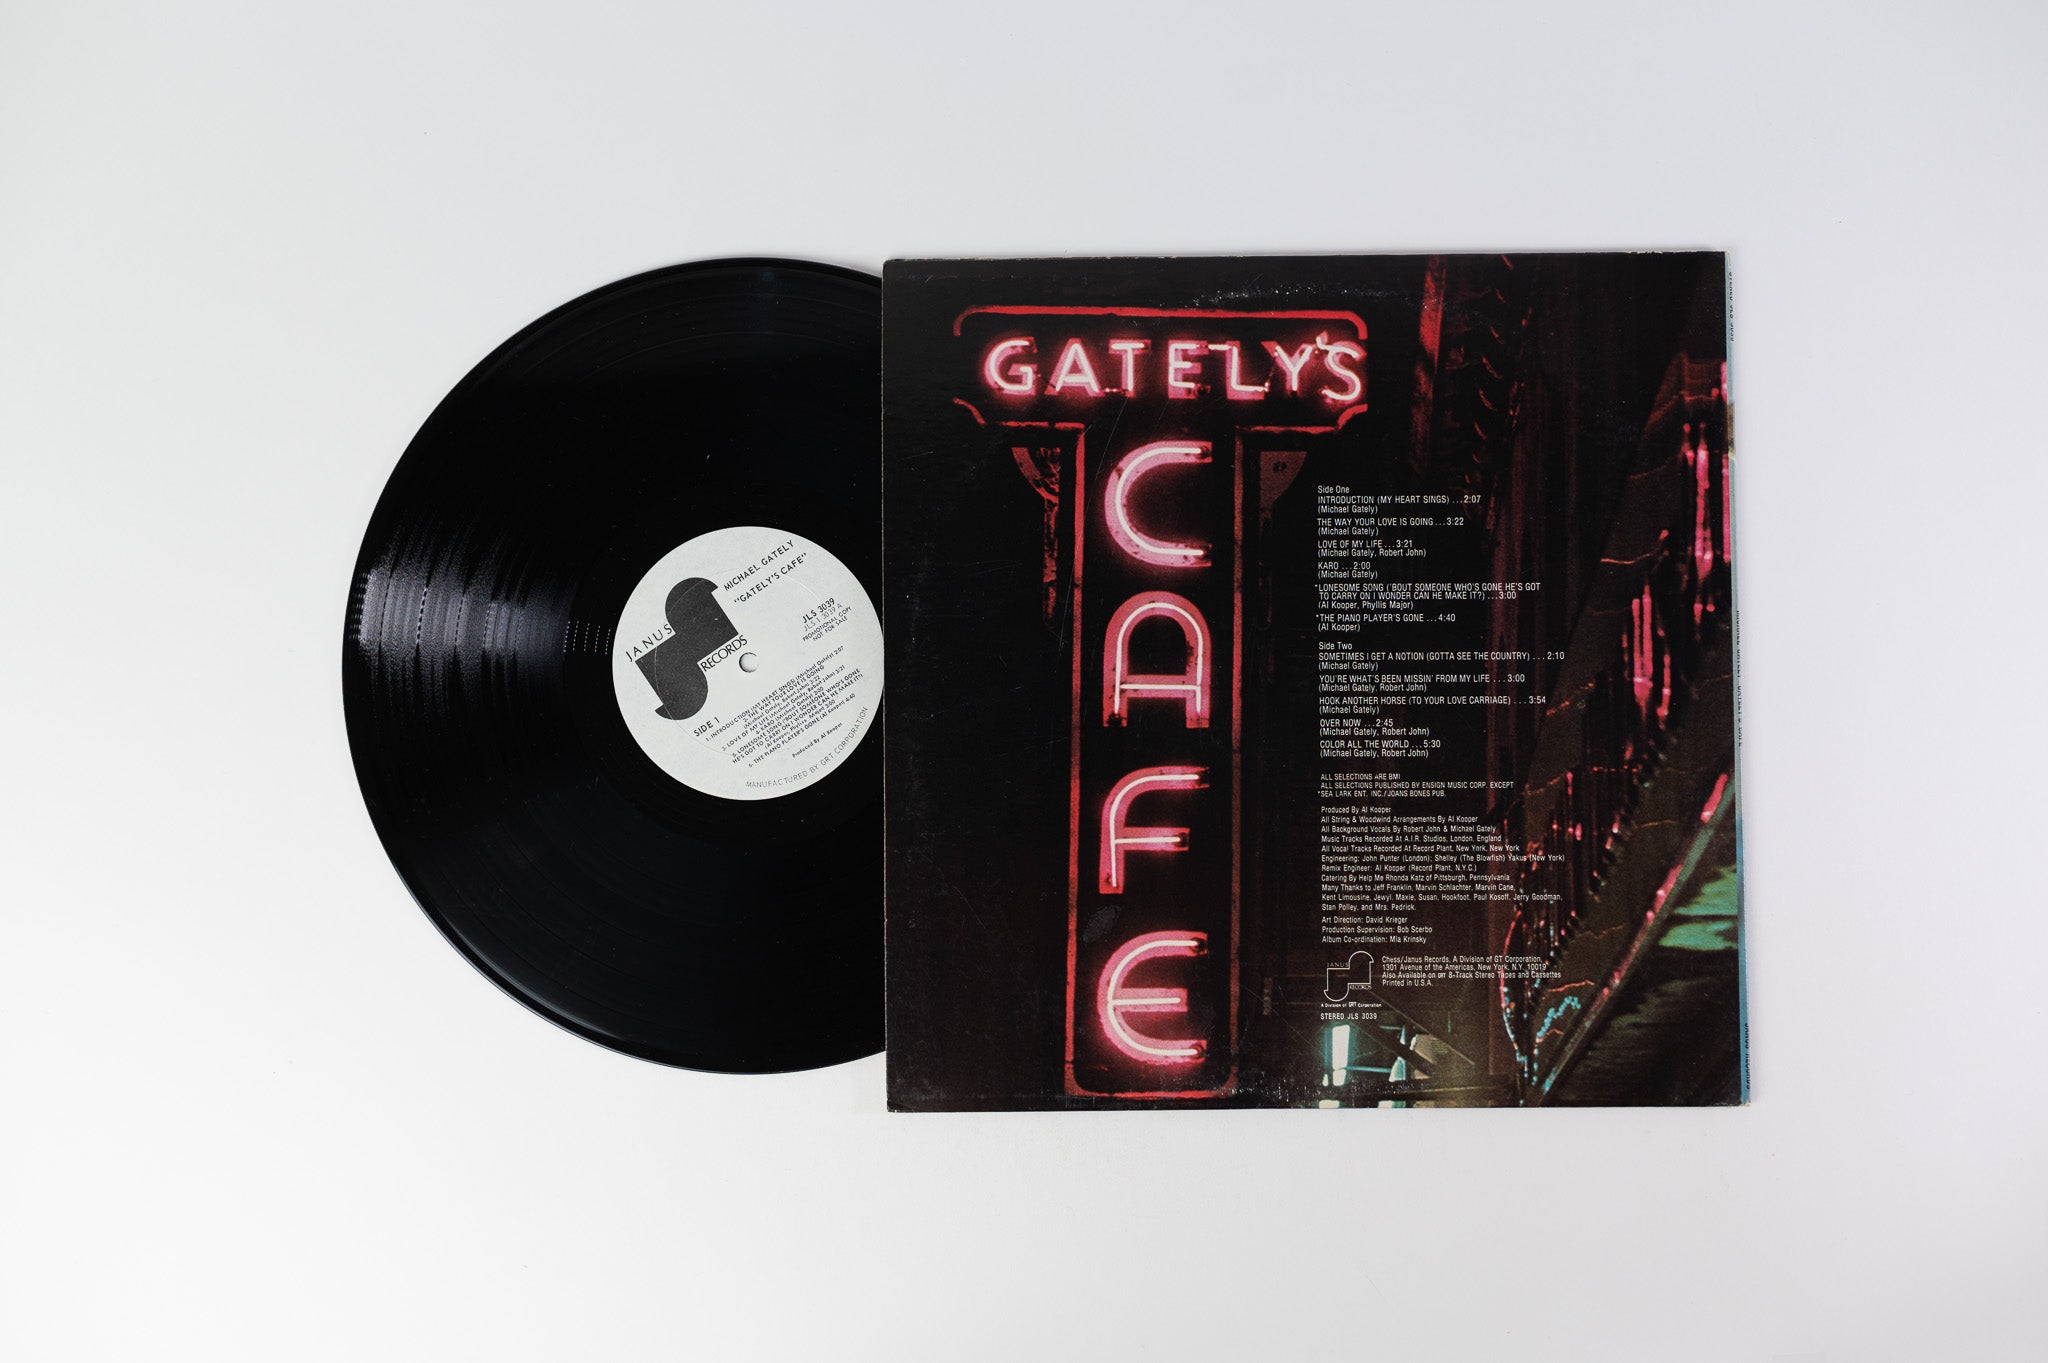 Michael Gately - Gately's Cafe on Janus